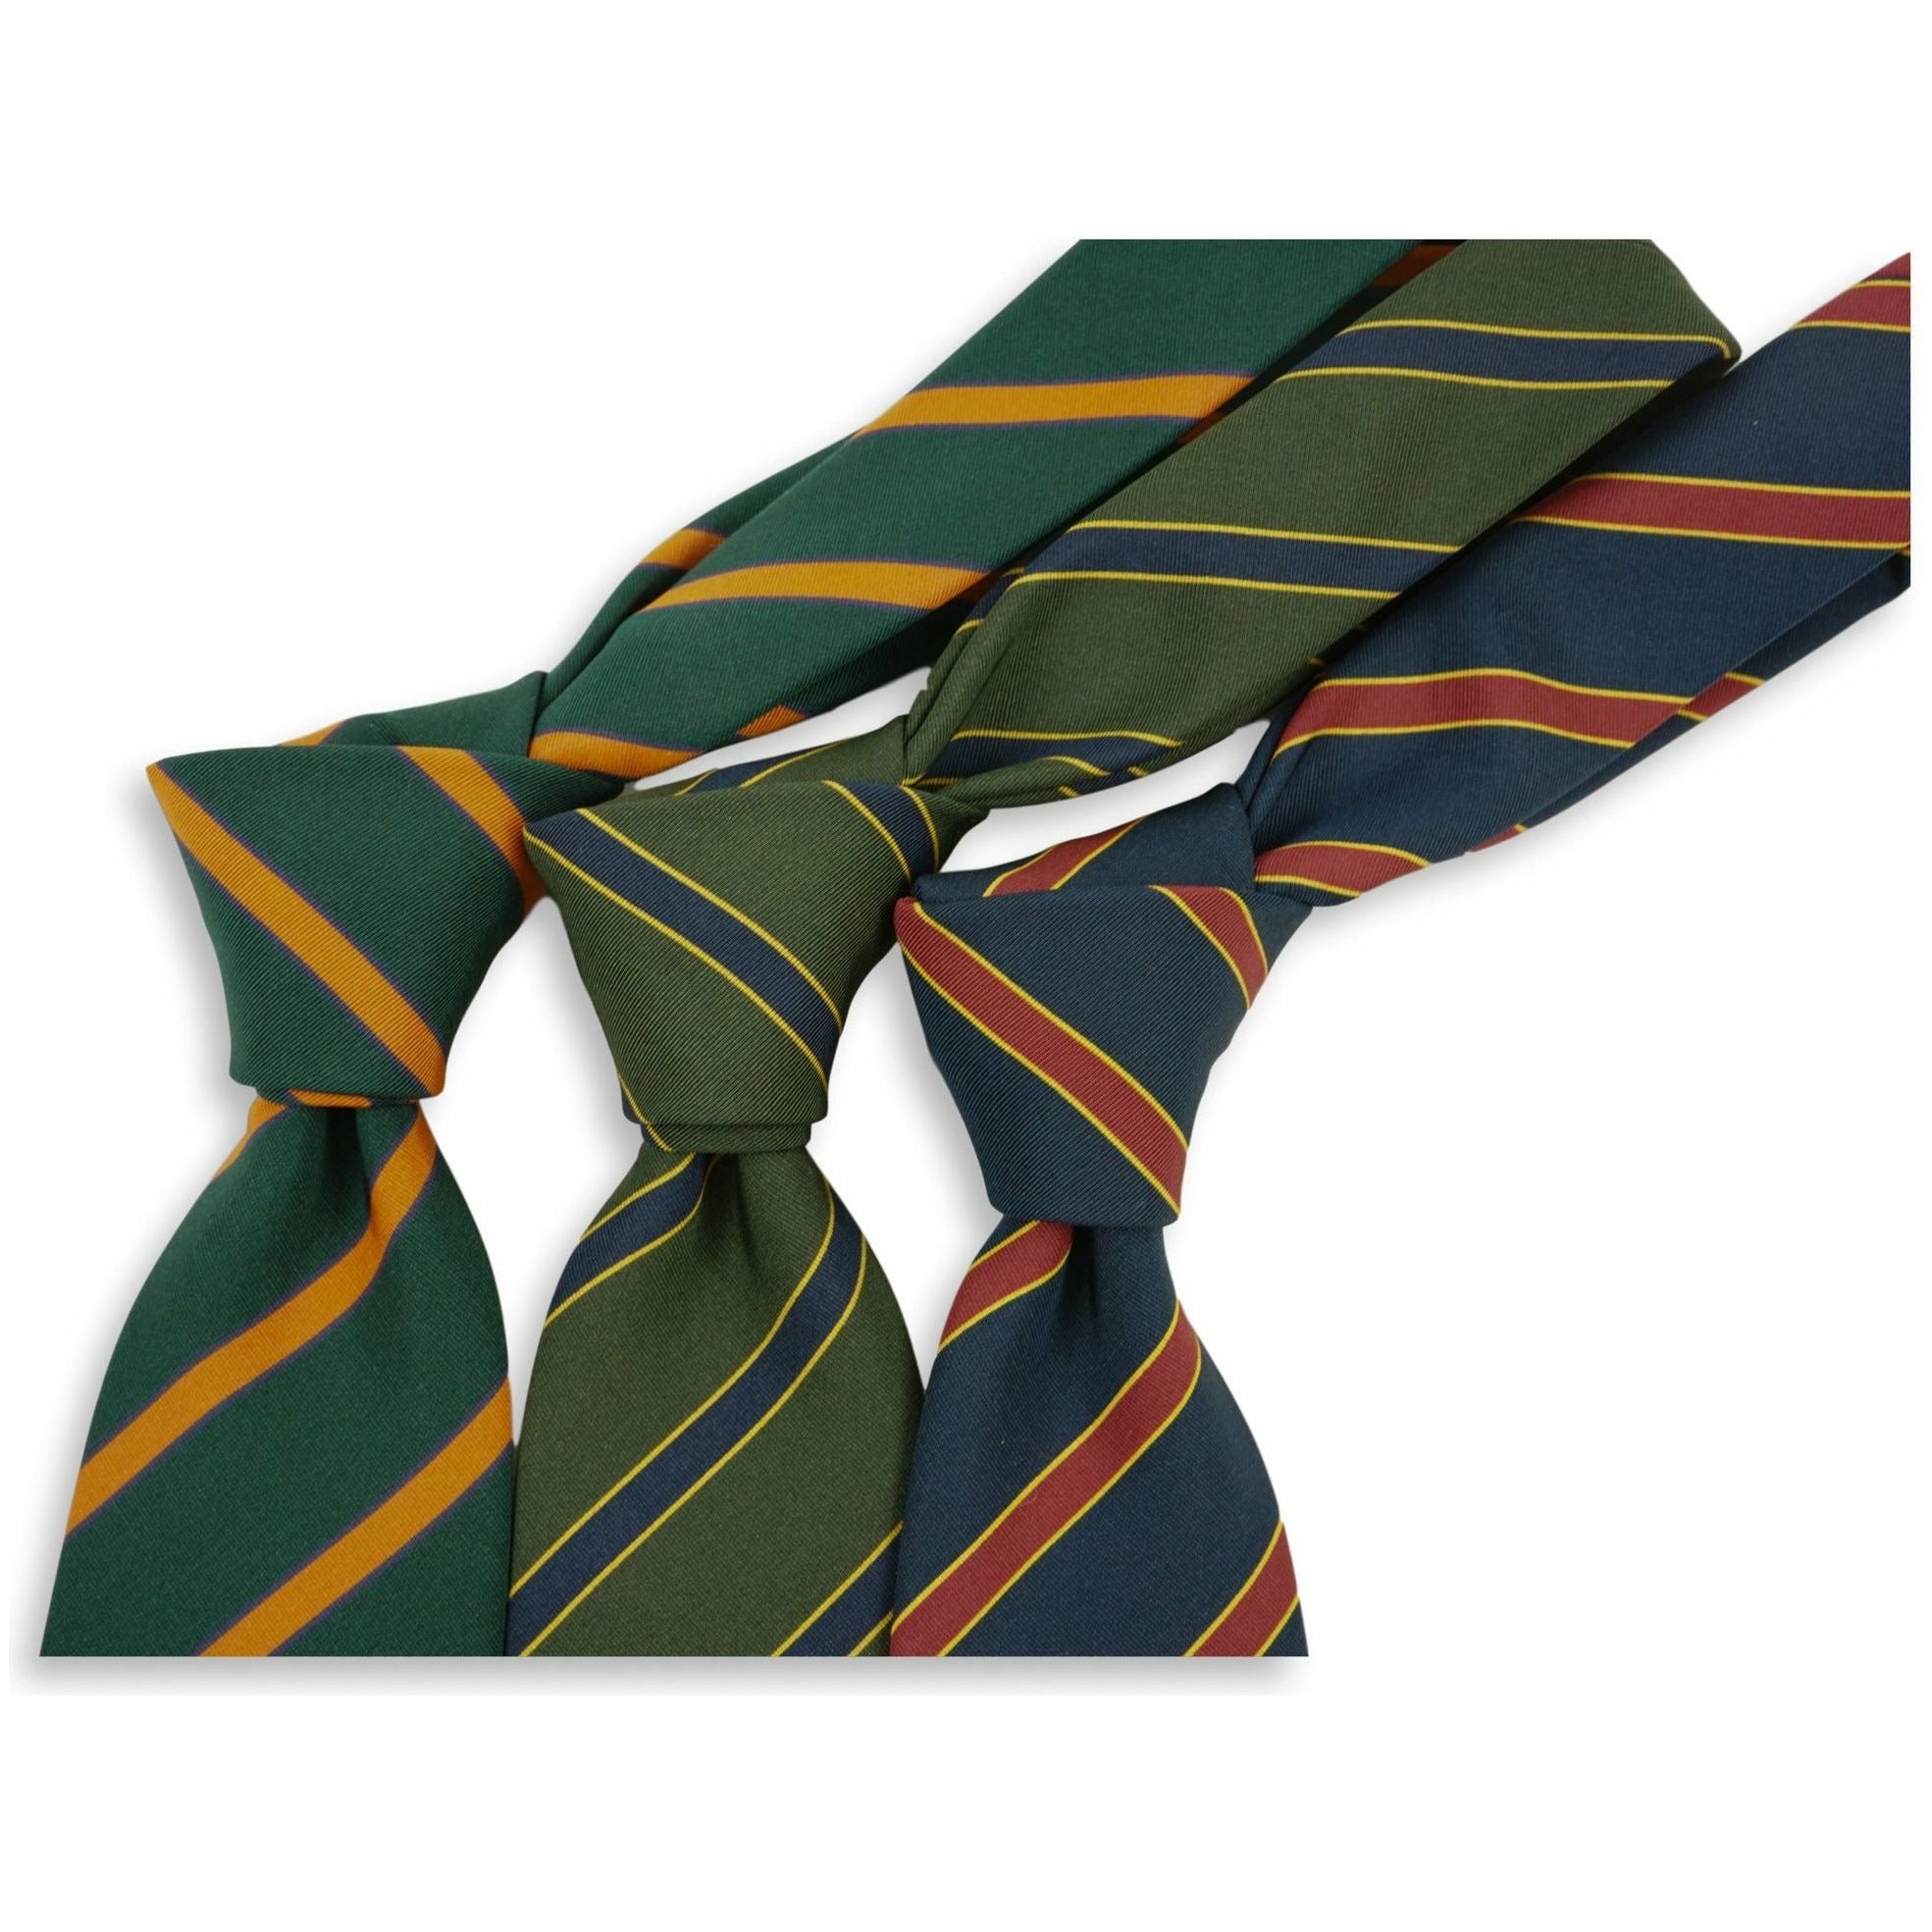 American Regimental Stripe Irish Poplin Tie